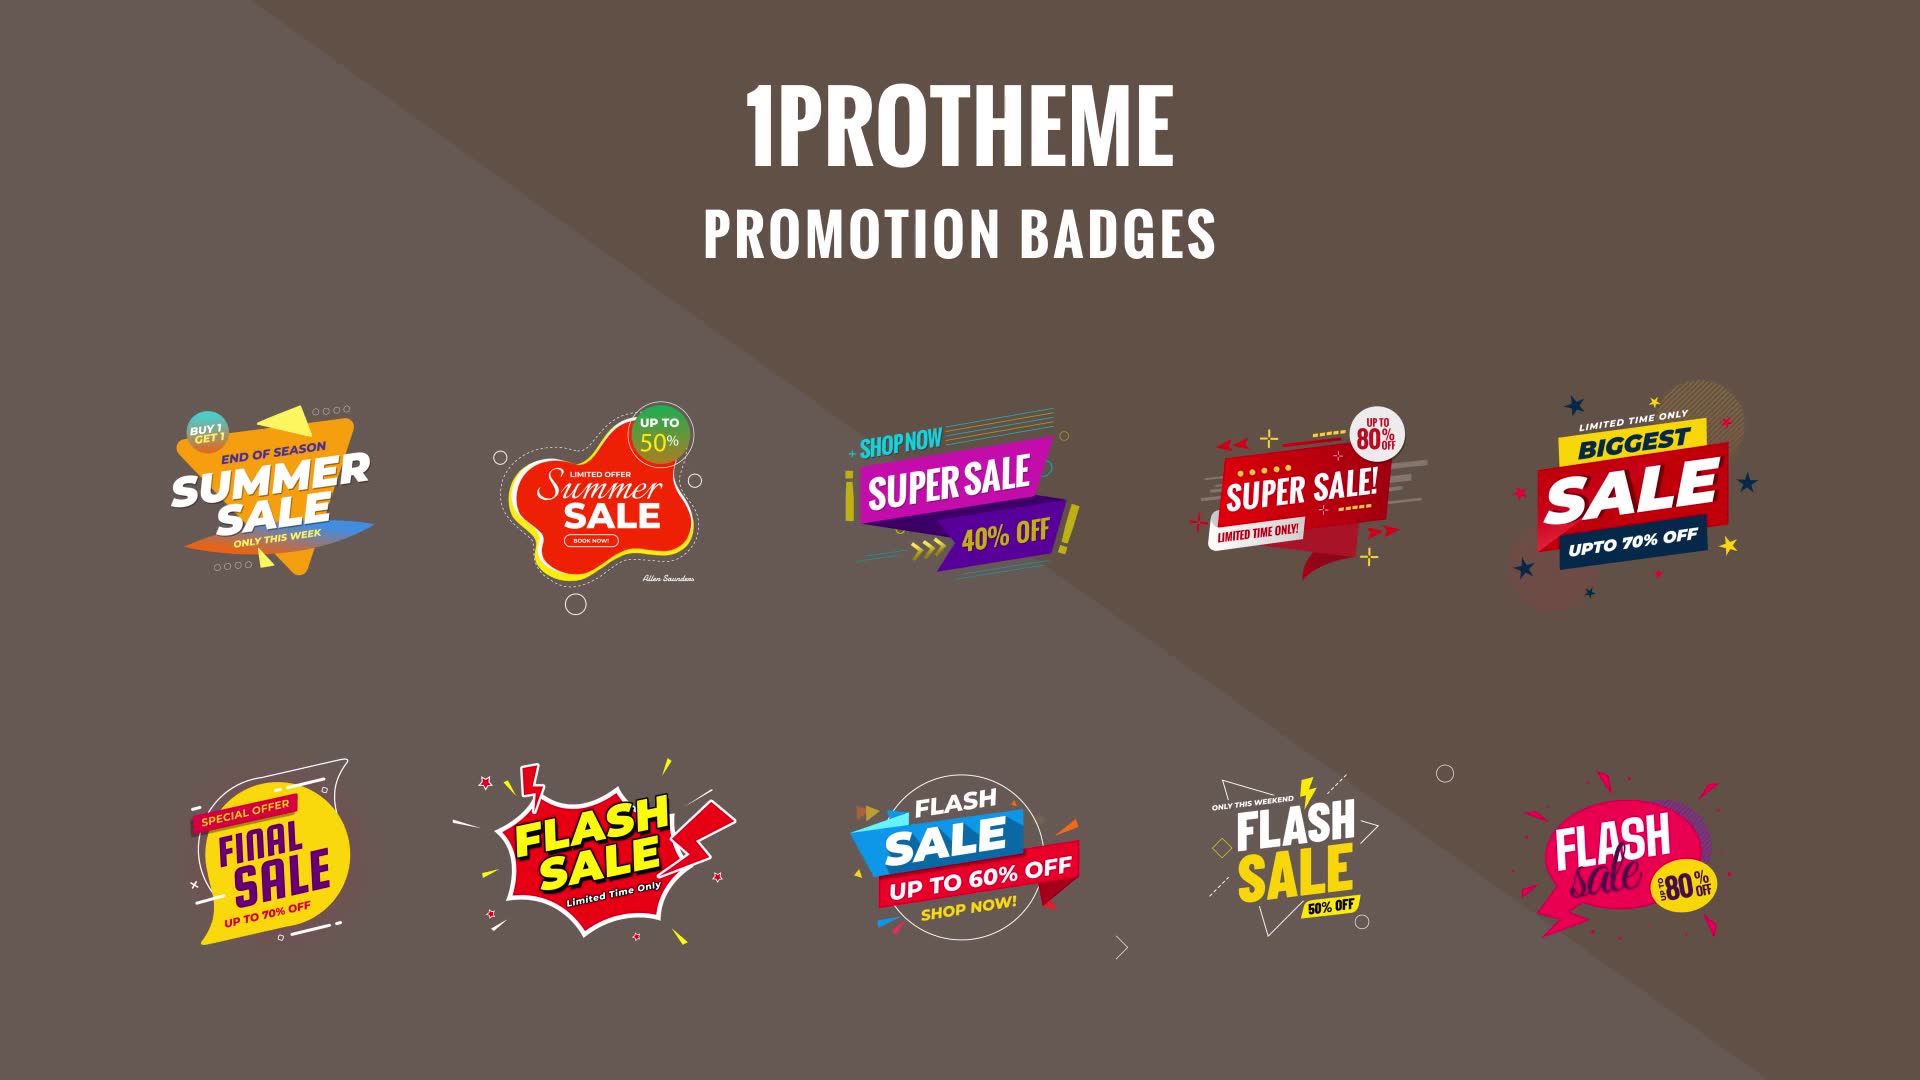 Protheme. Promo poliqrafiya. 5 promotion